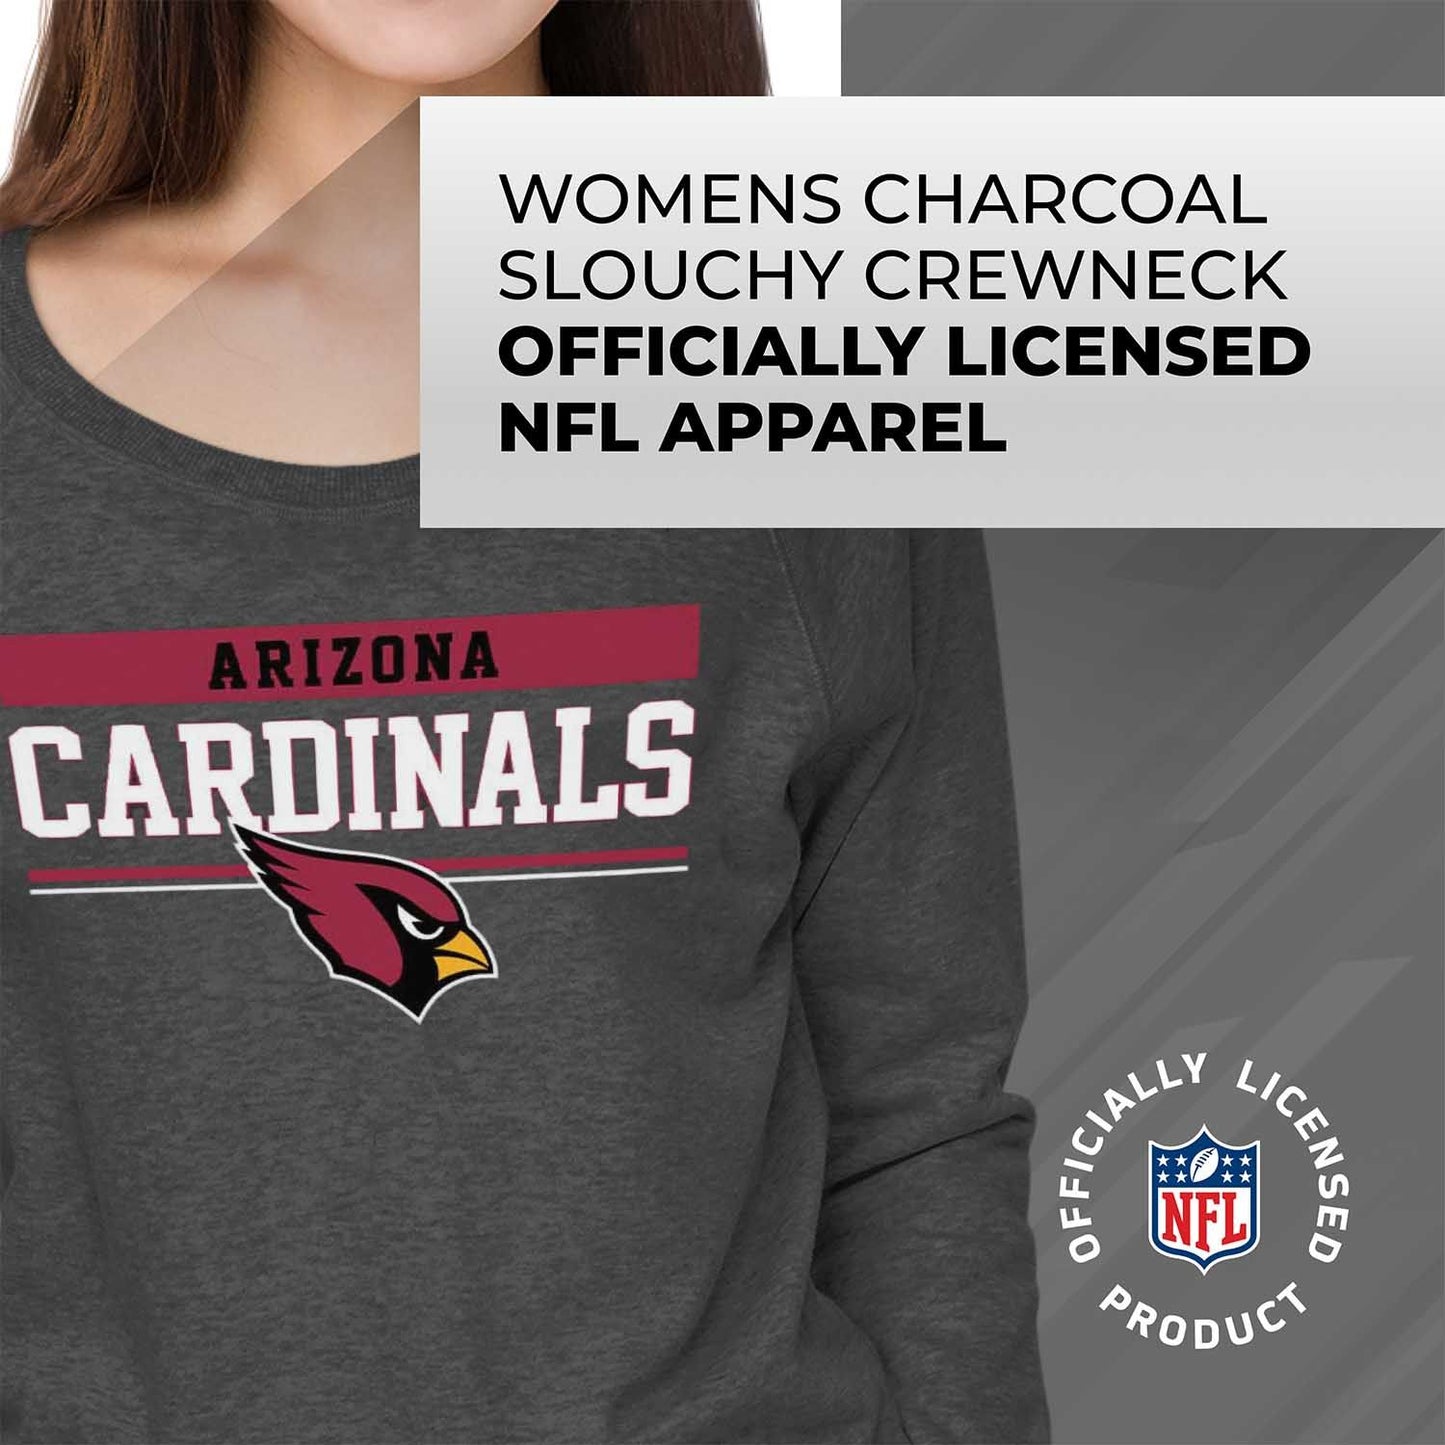 Arizona Cardinals NFL Womens Charcoal Crew Neck Football Apparel - Charcoal